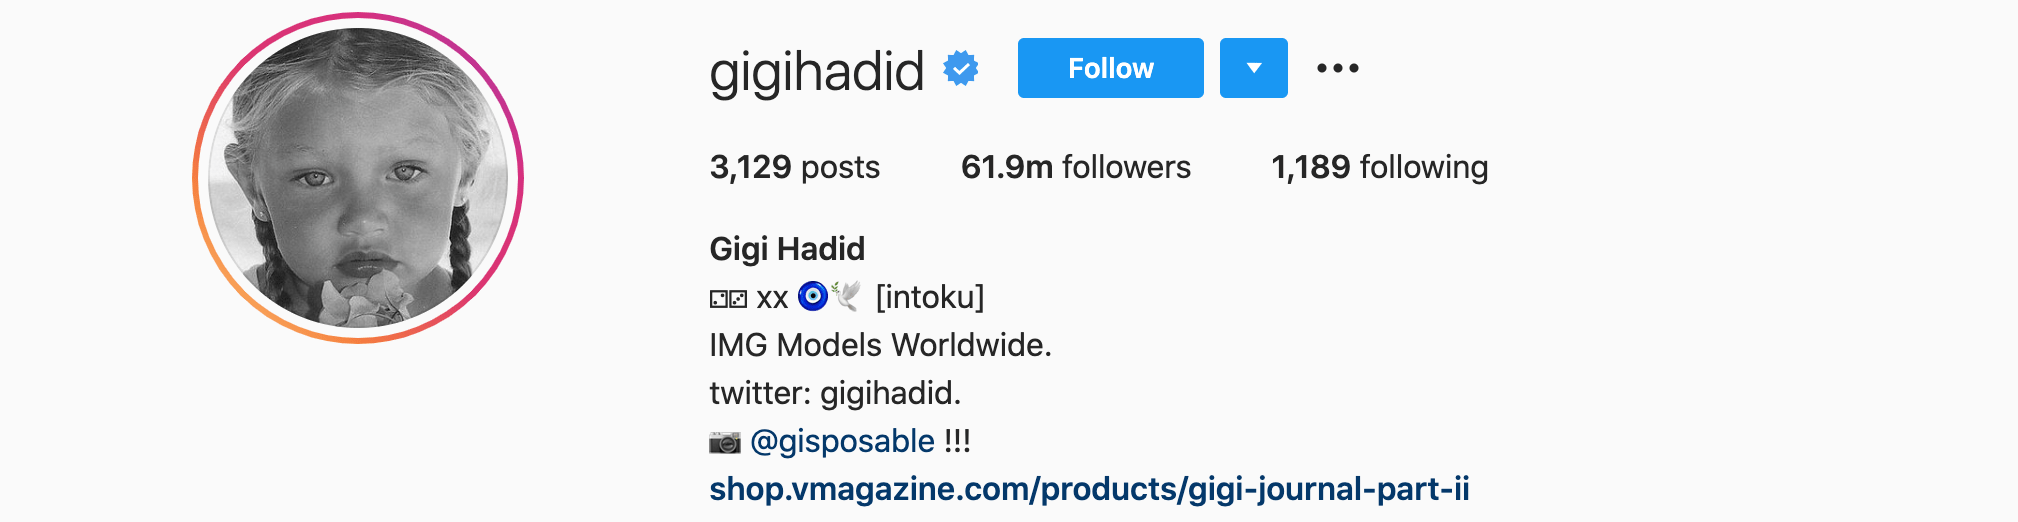 Top Instagram Influencers - GIGI HADID